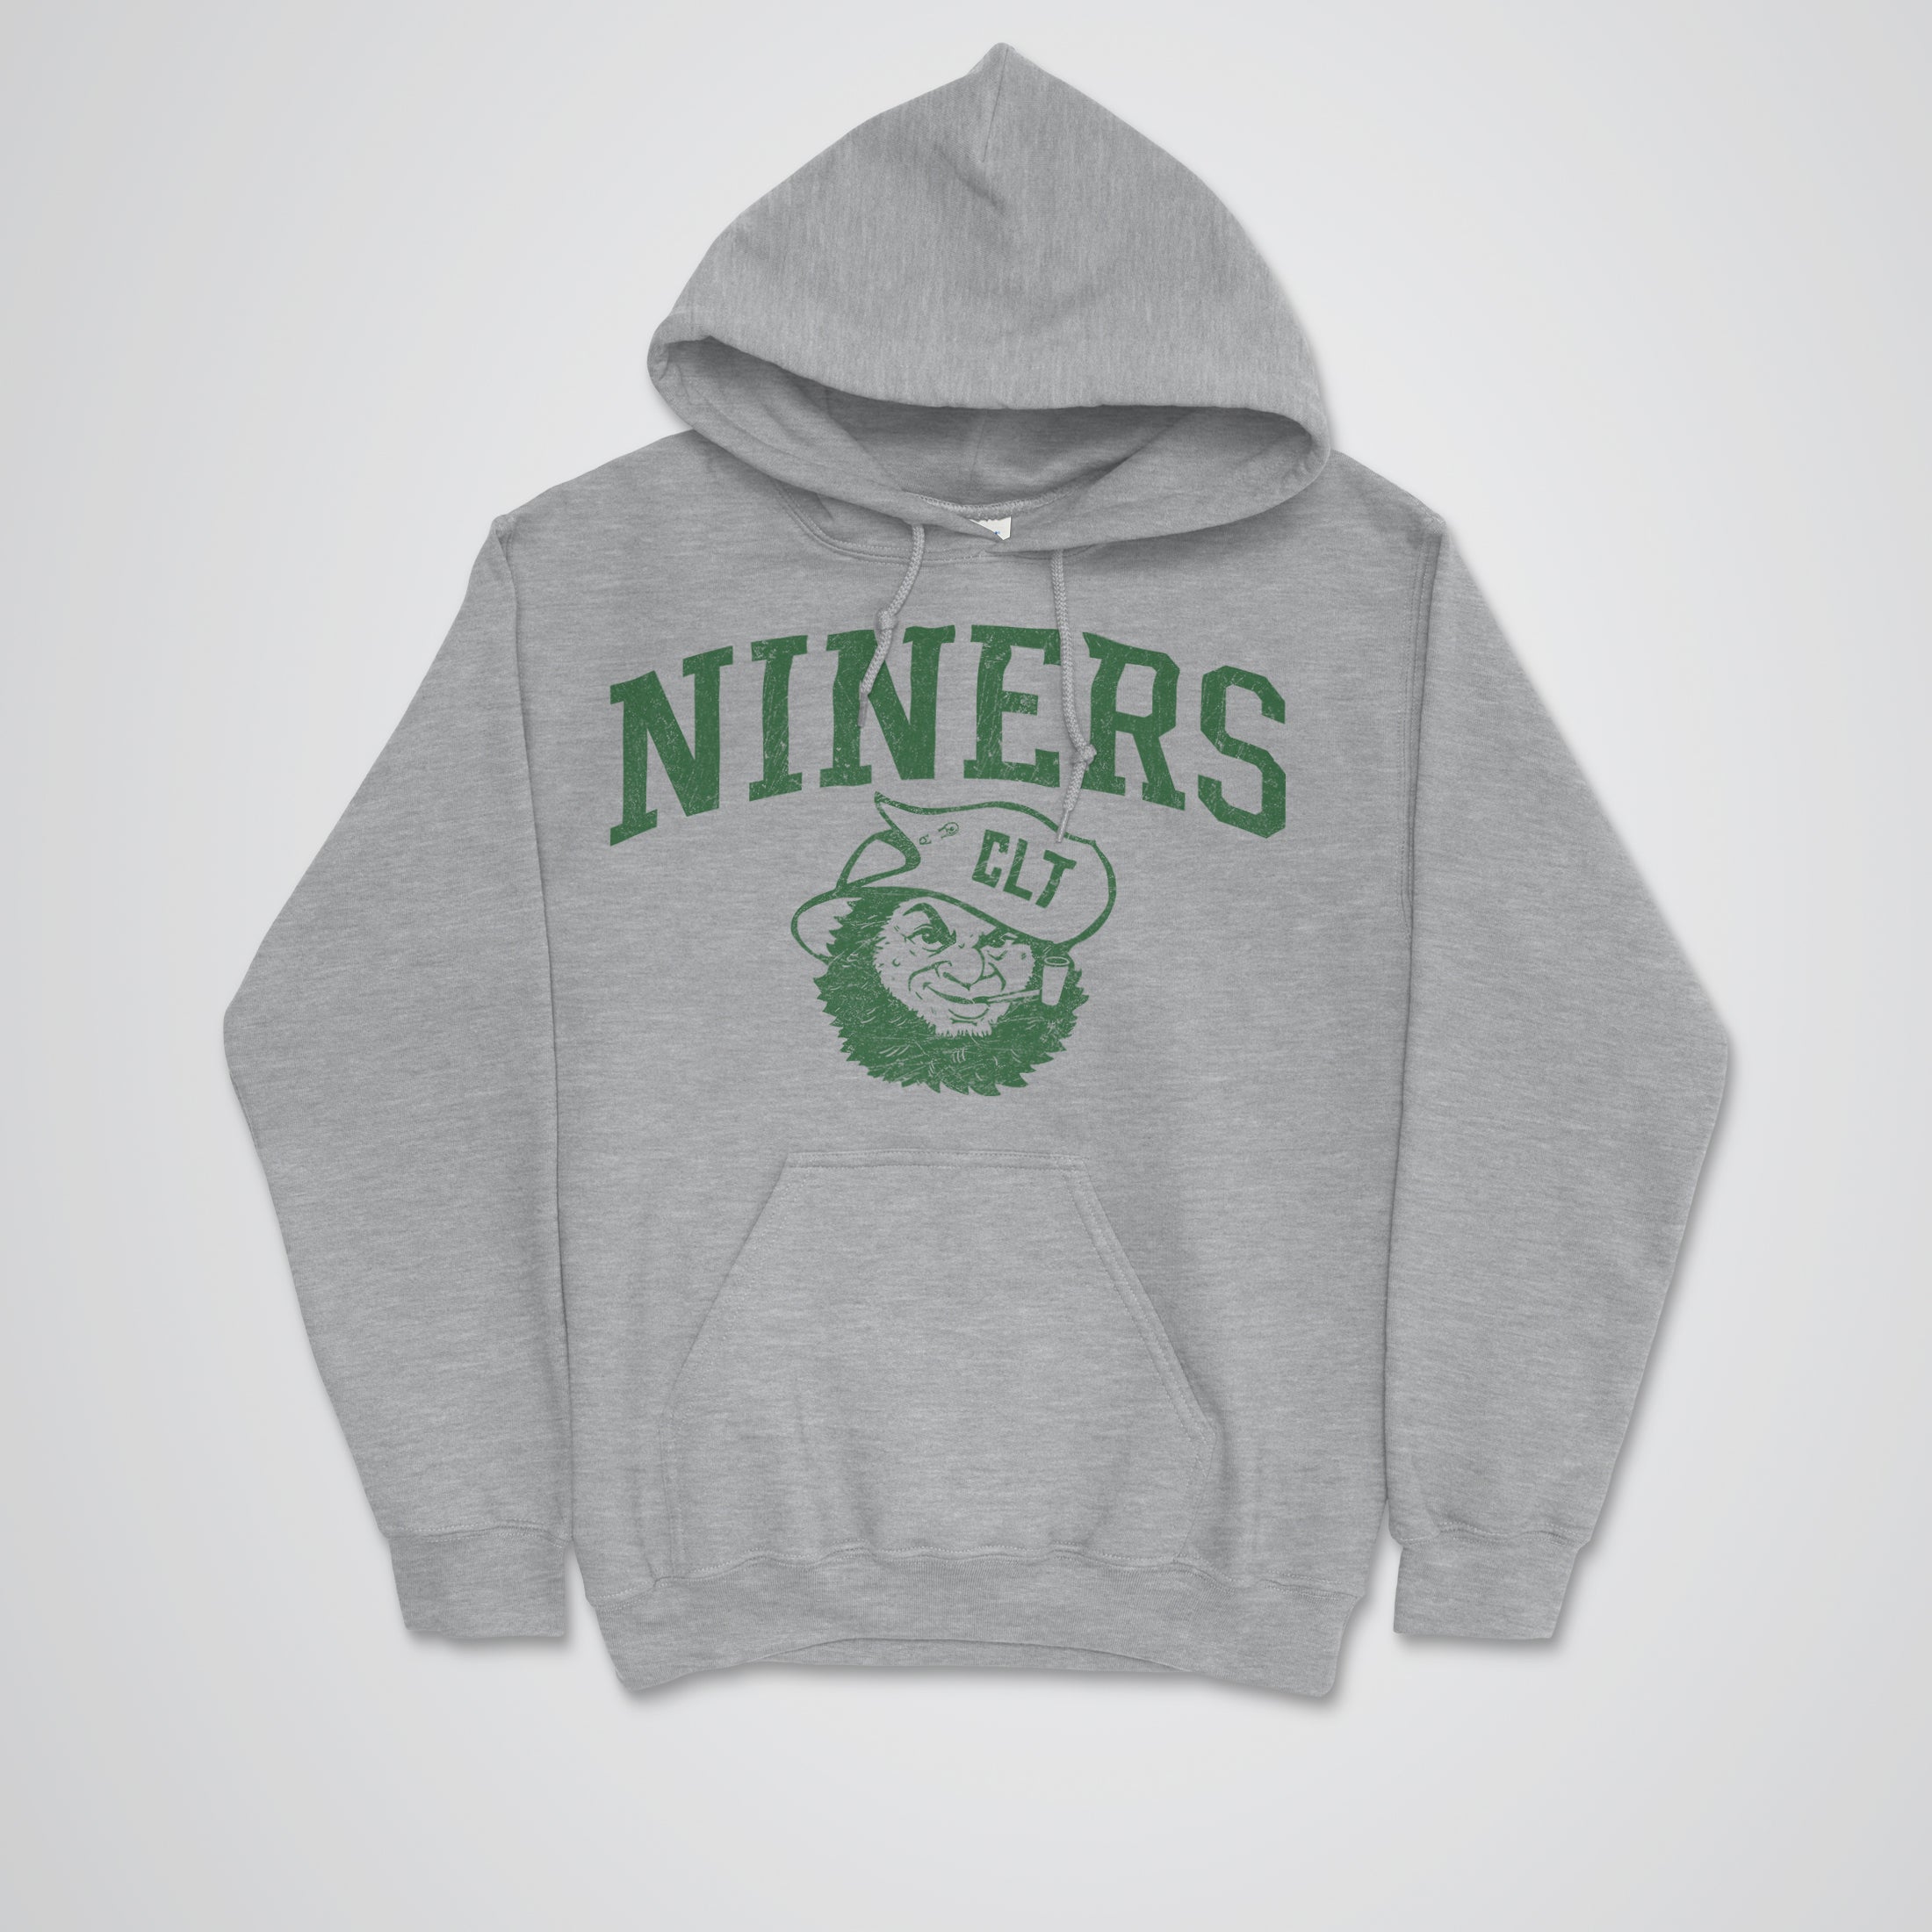 niners sweater